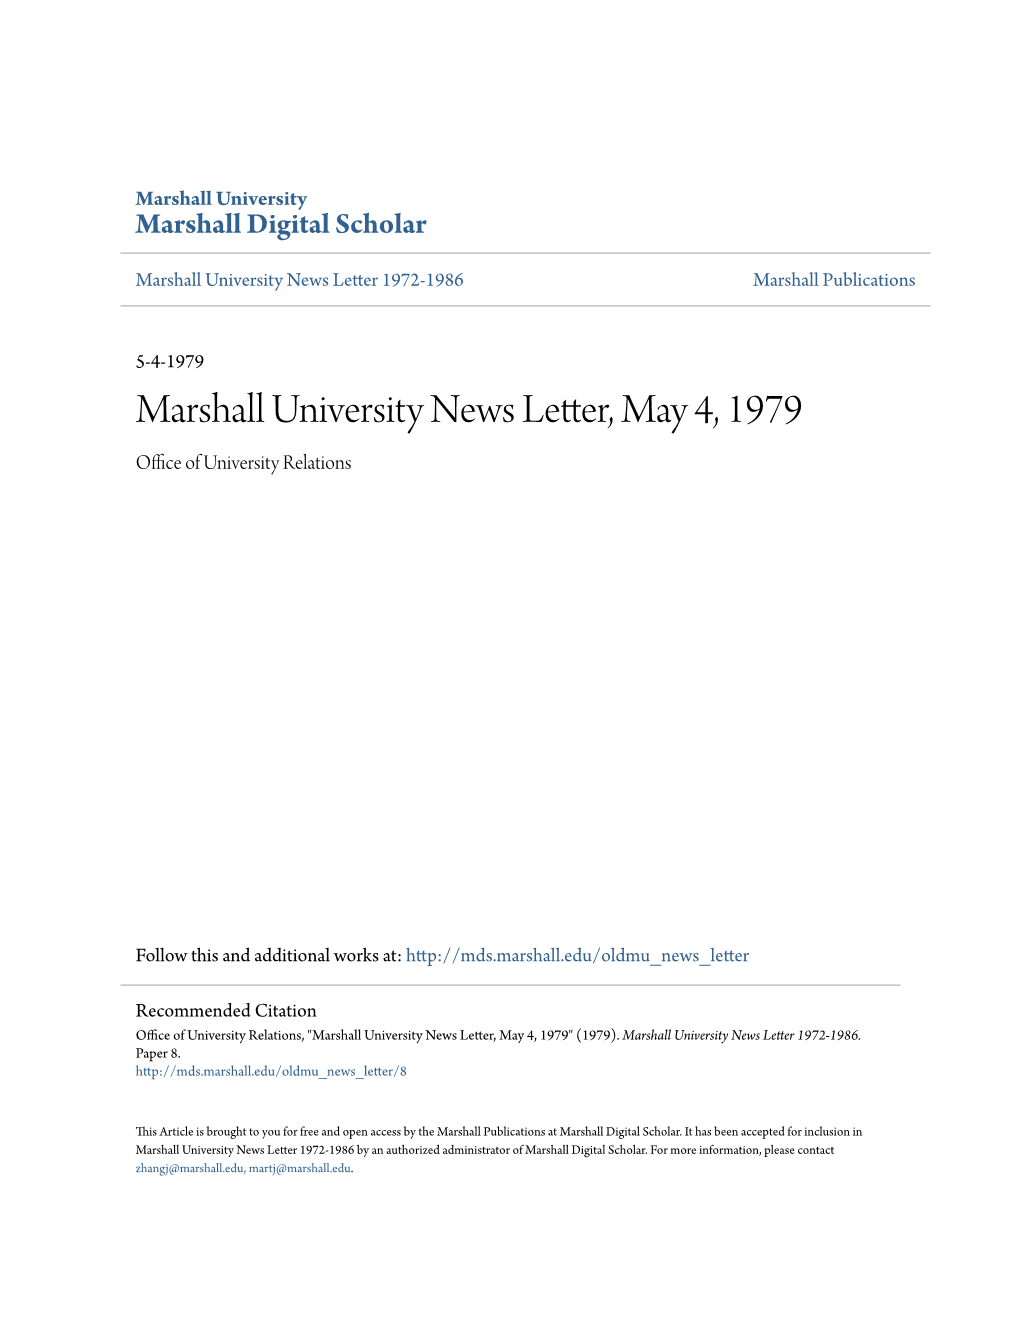 Marshall University News Letter, May 4, 1979 Office Ofni U Versity Relations